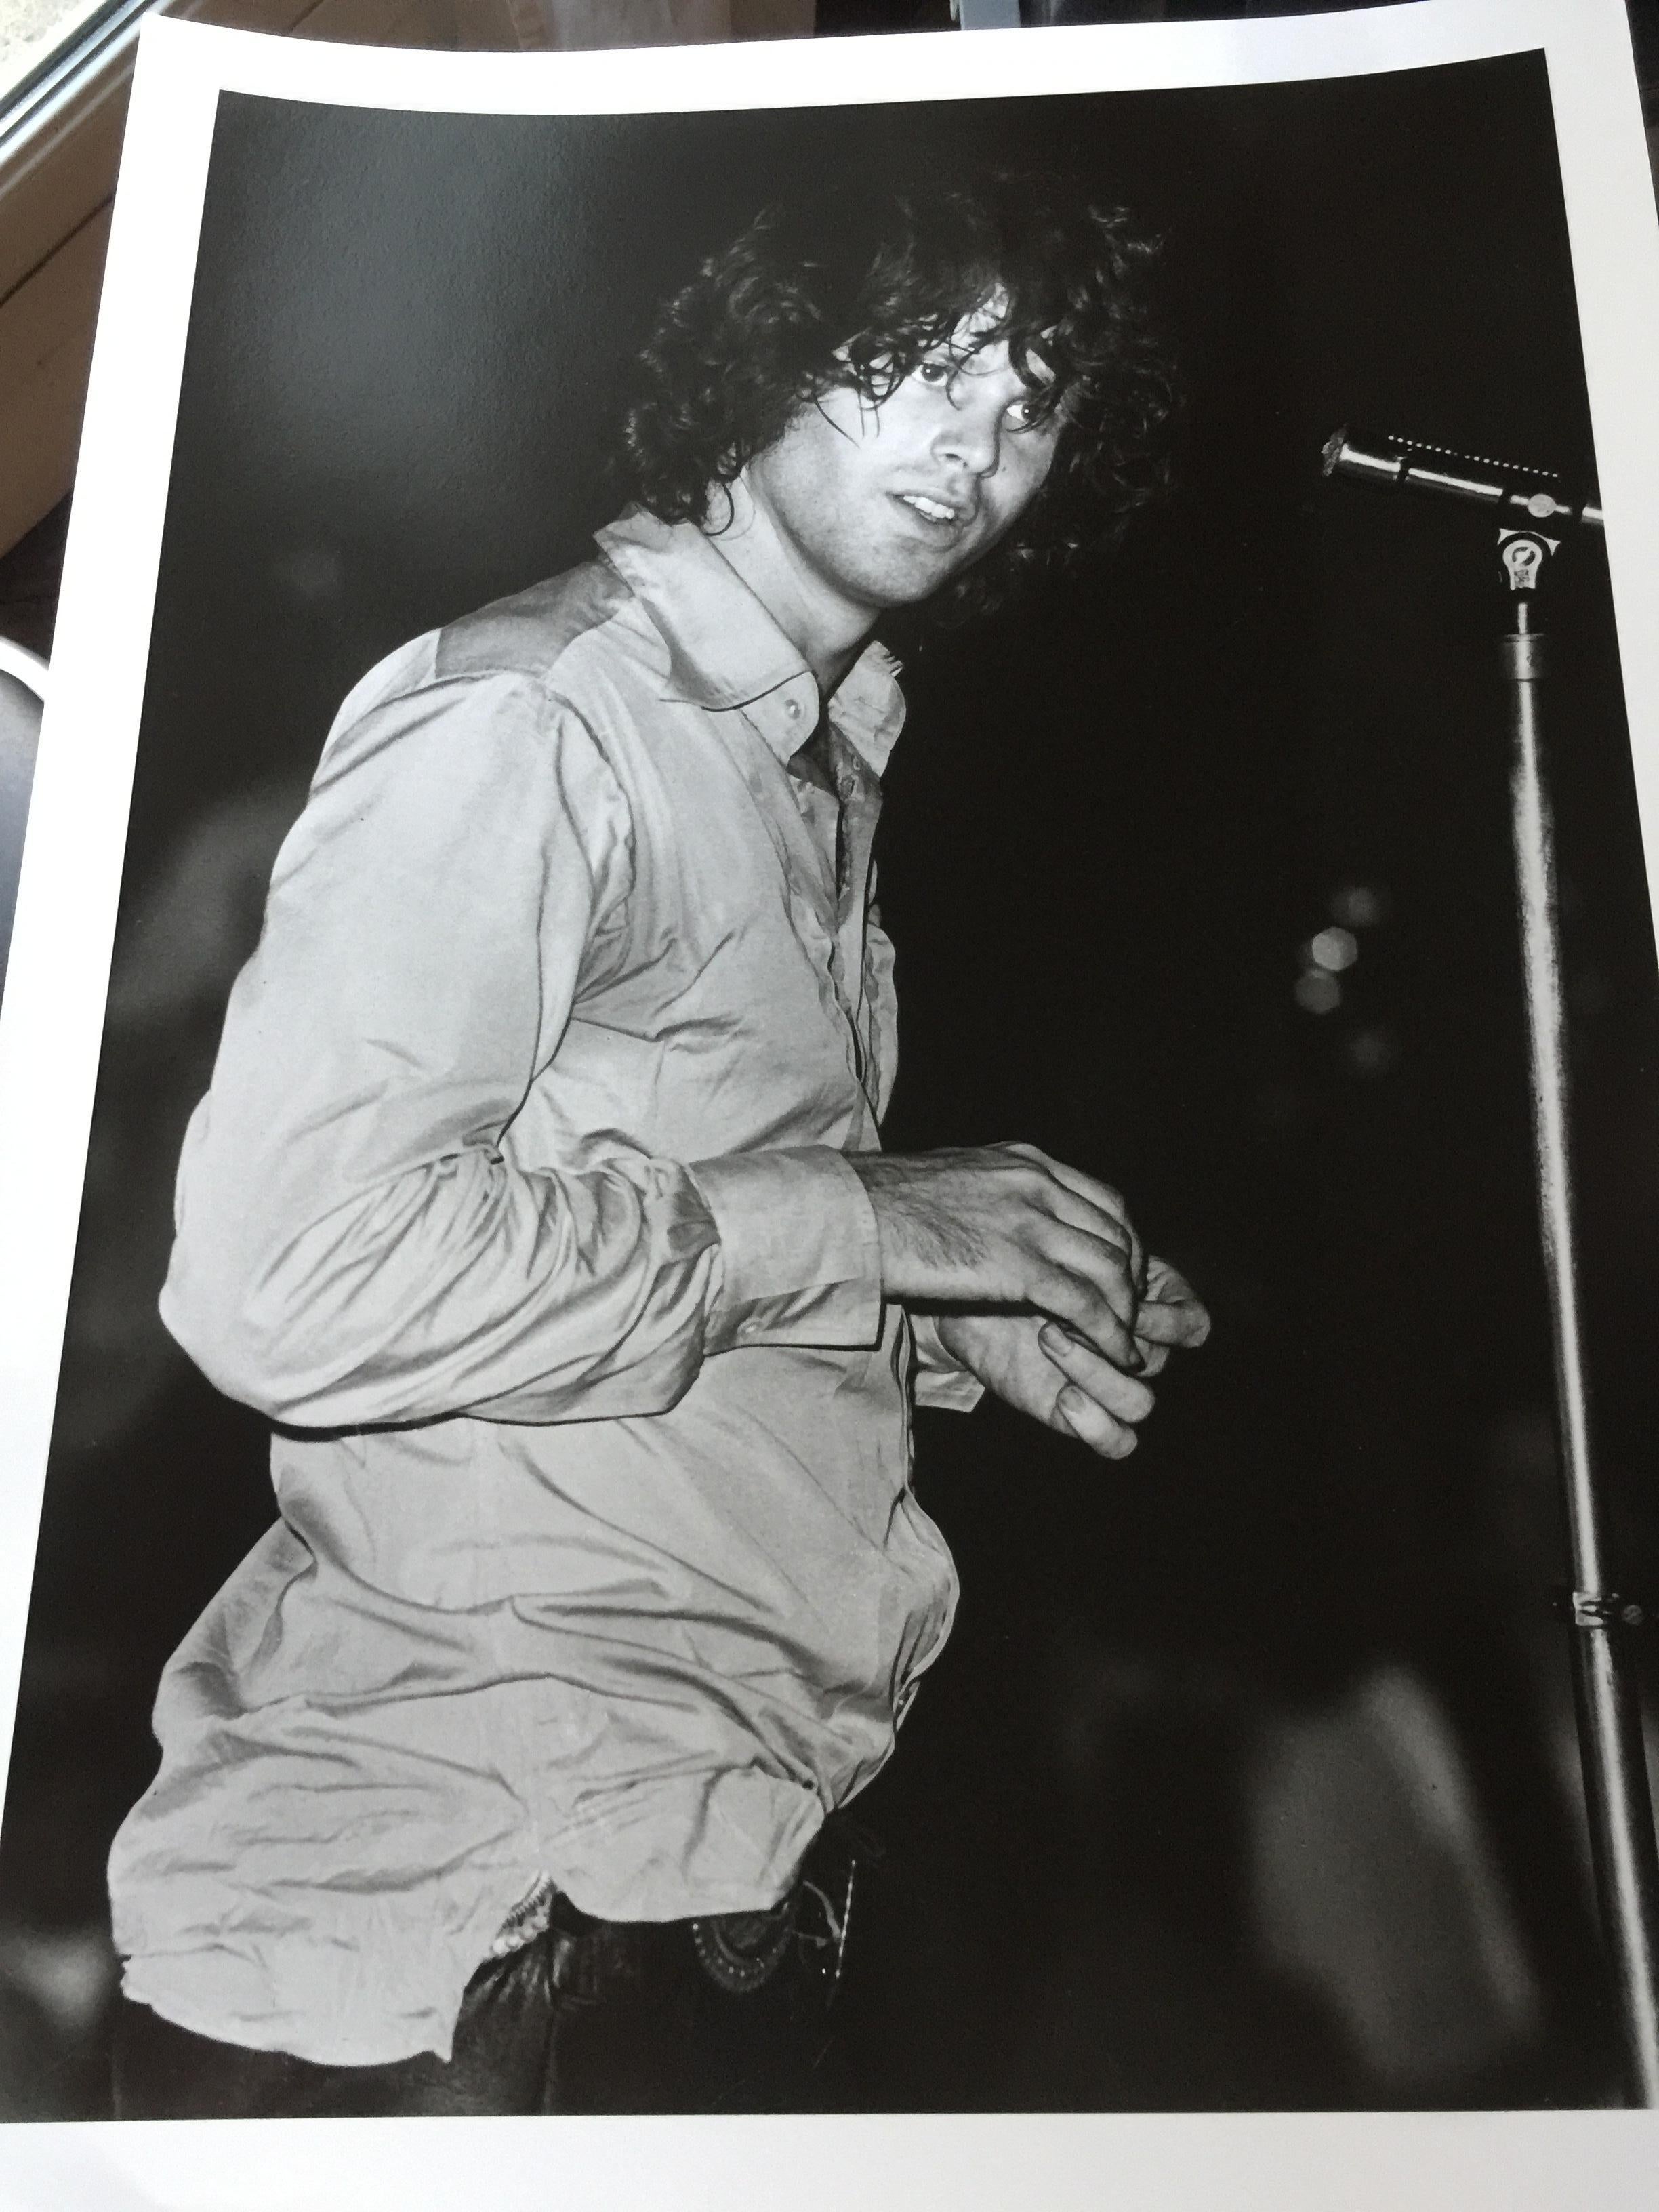 Günter Zint Portrait Photograph - The Doors European Tour